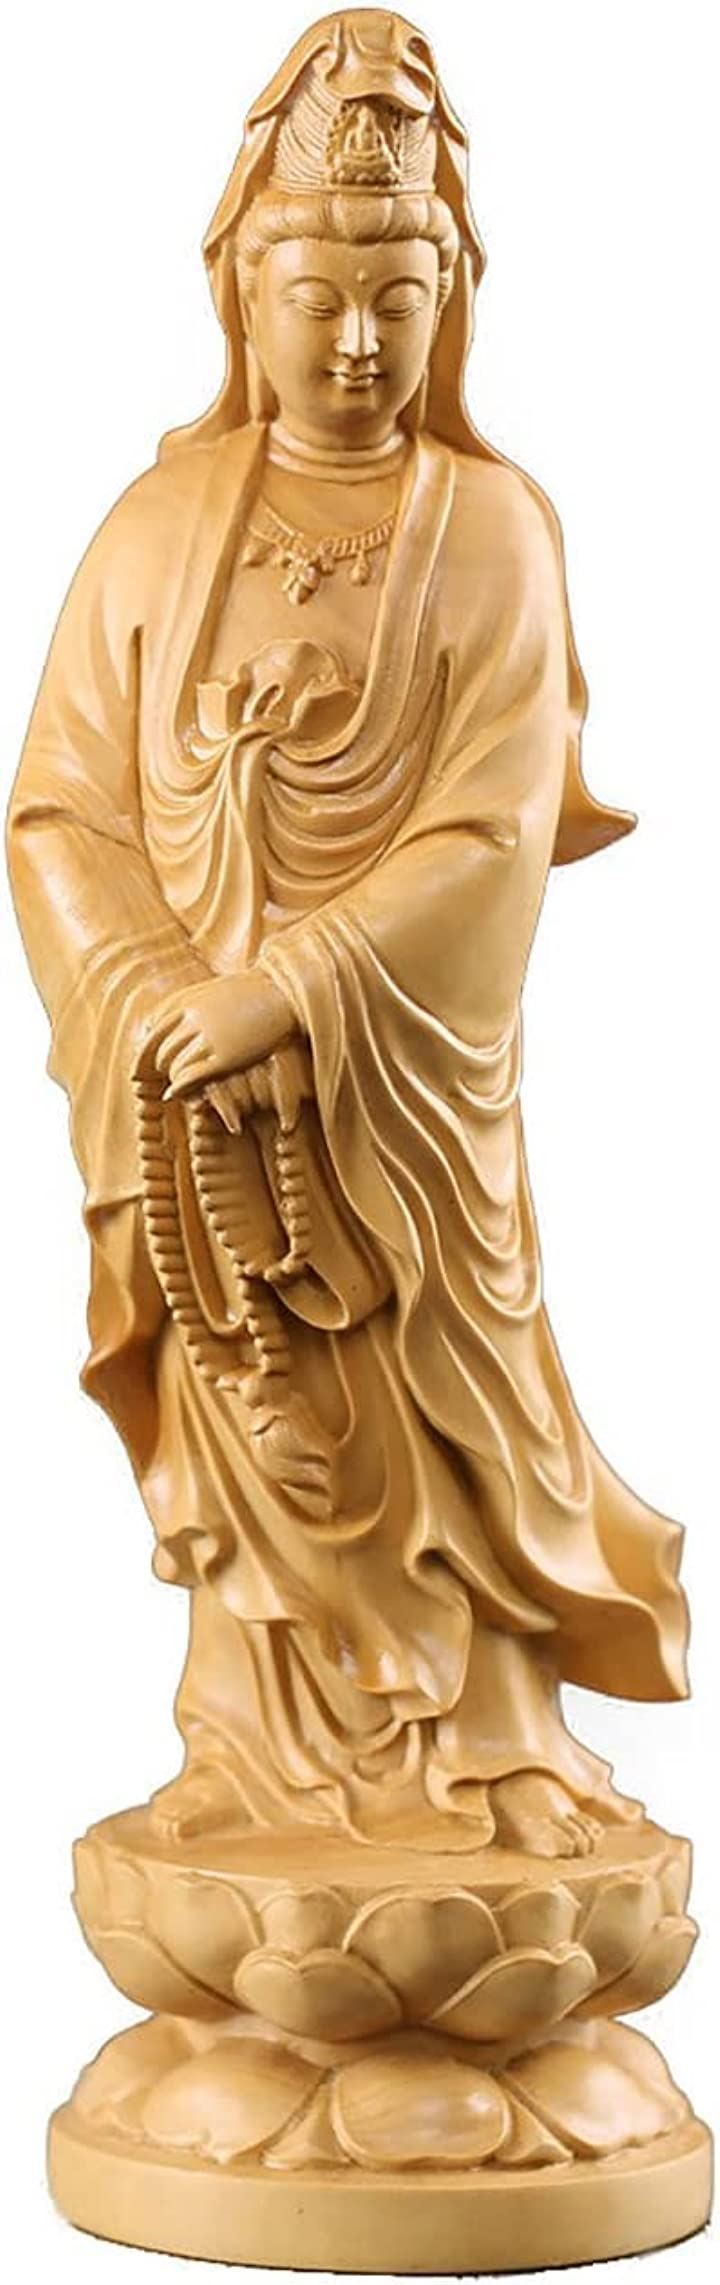 観音木彫 仏像 木彫り 観音像 木製彫刻 ツゲ製 高級木彫り 仏教美術 仏壇仏像 高さ12cm